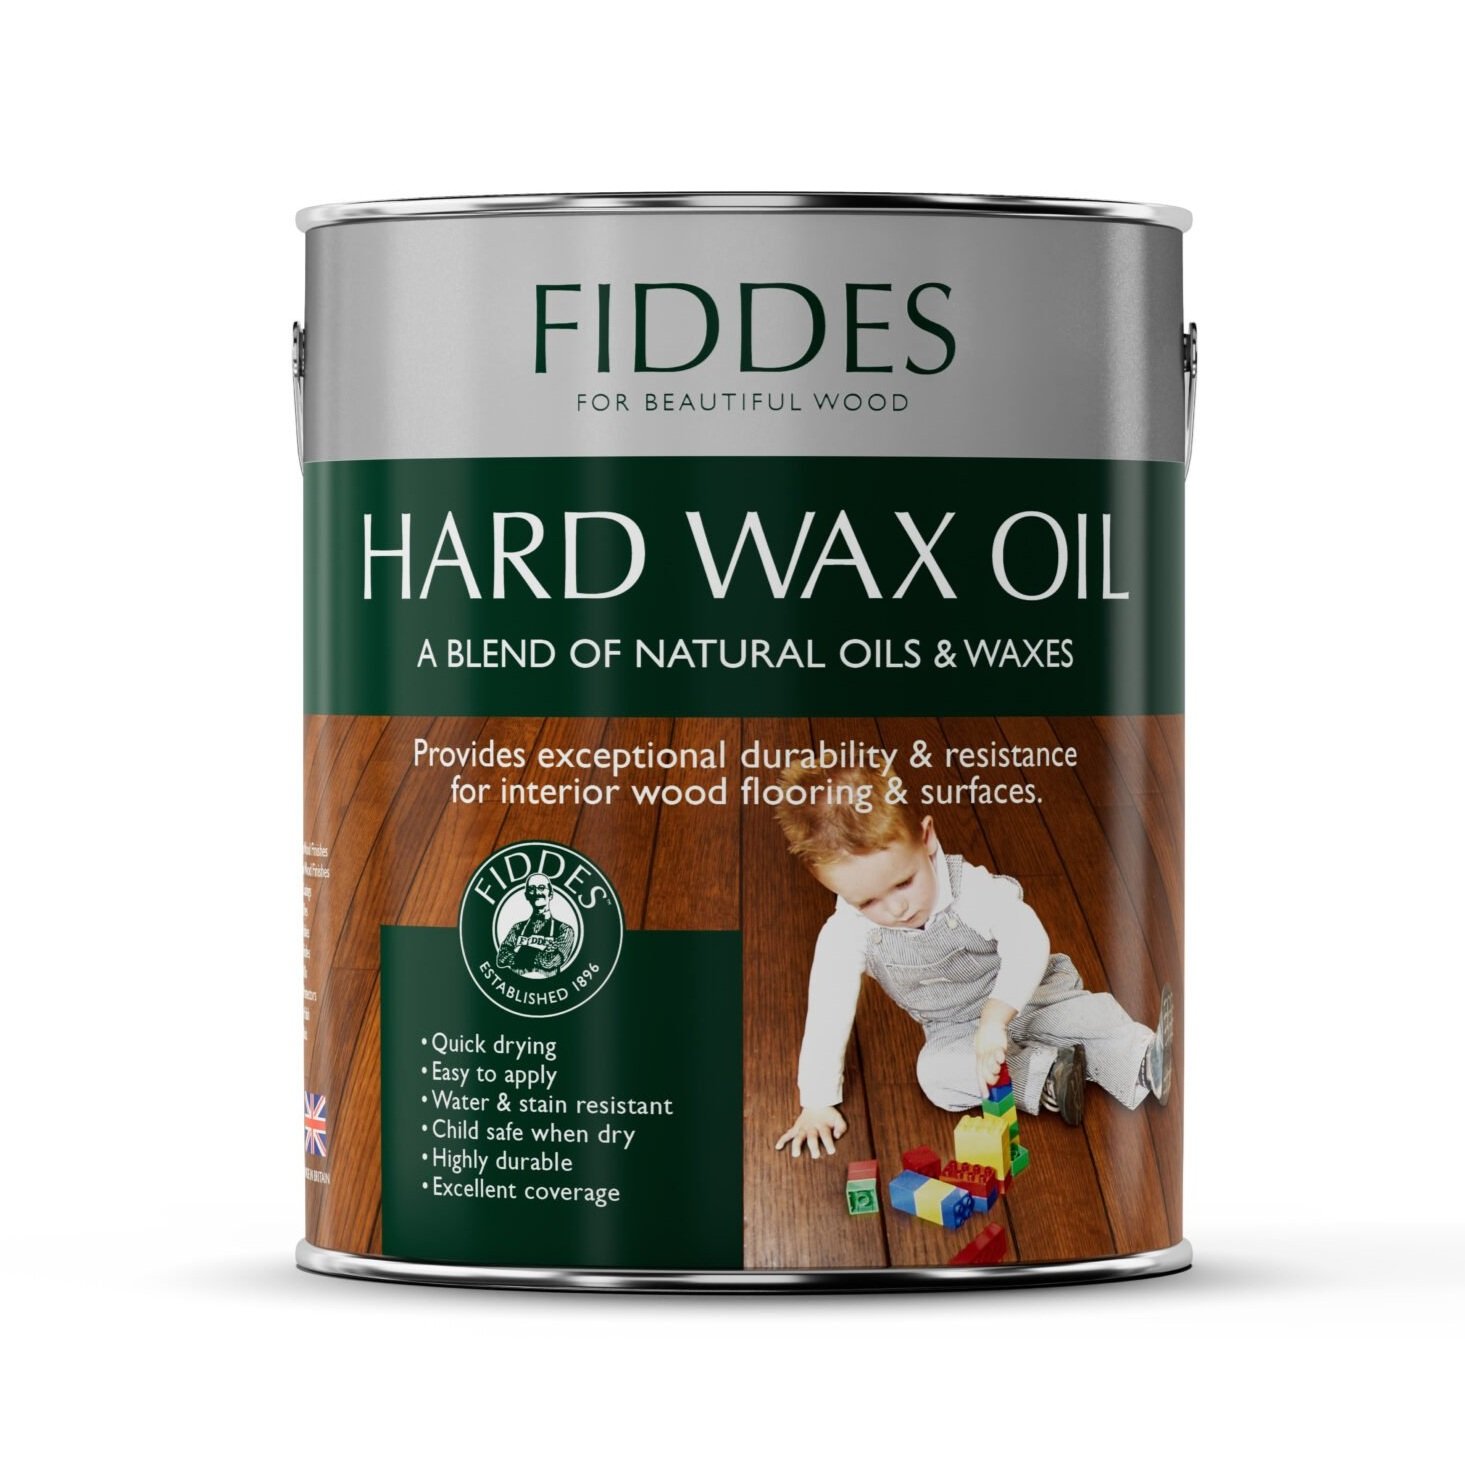 Fiddes Hardwax Oil